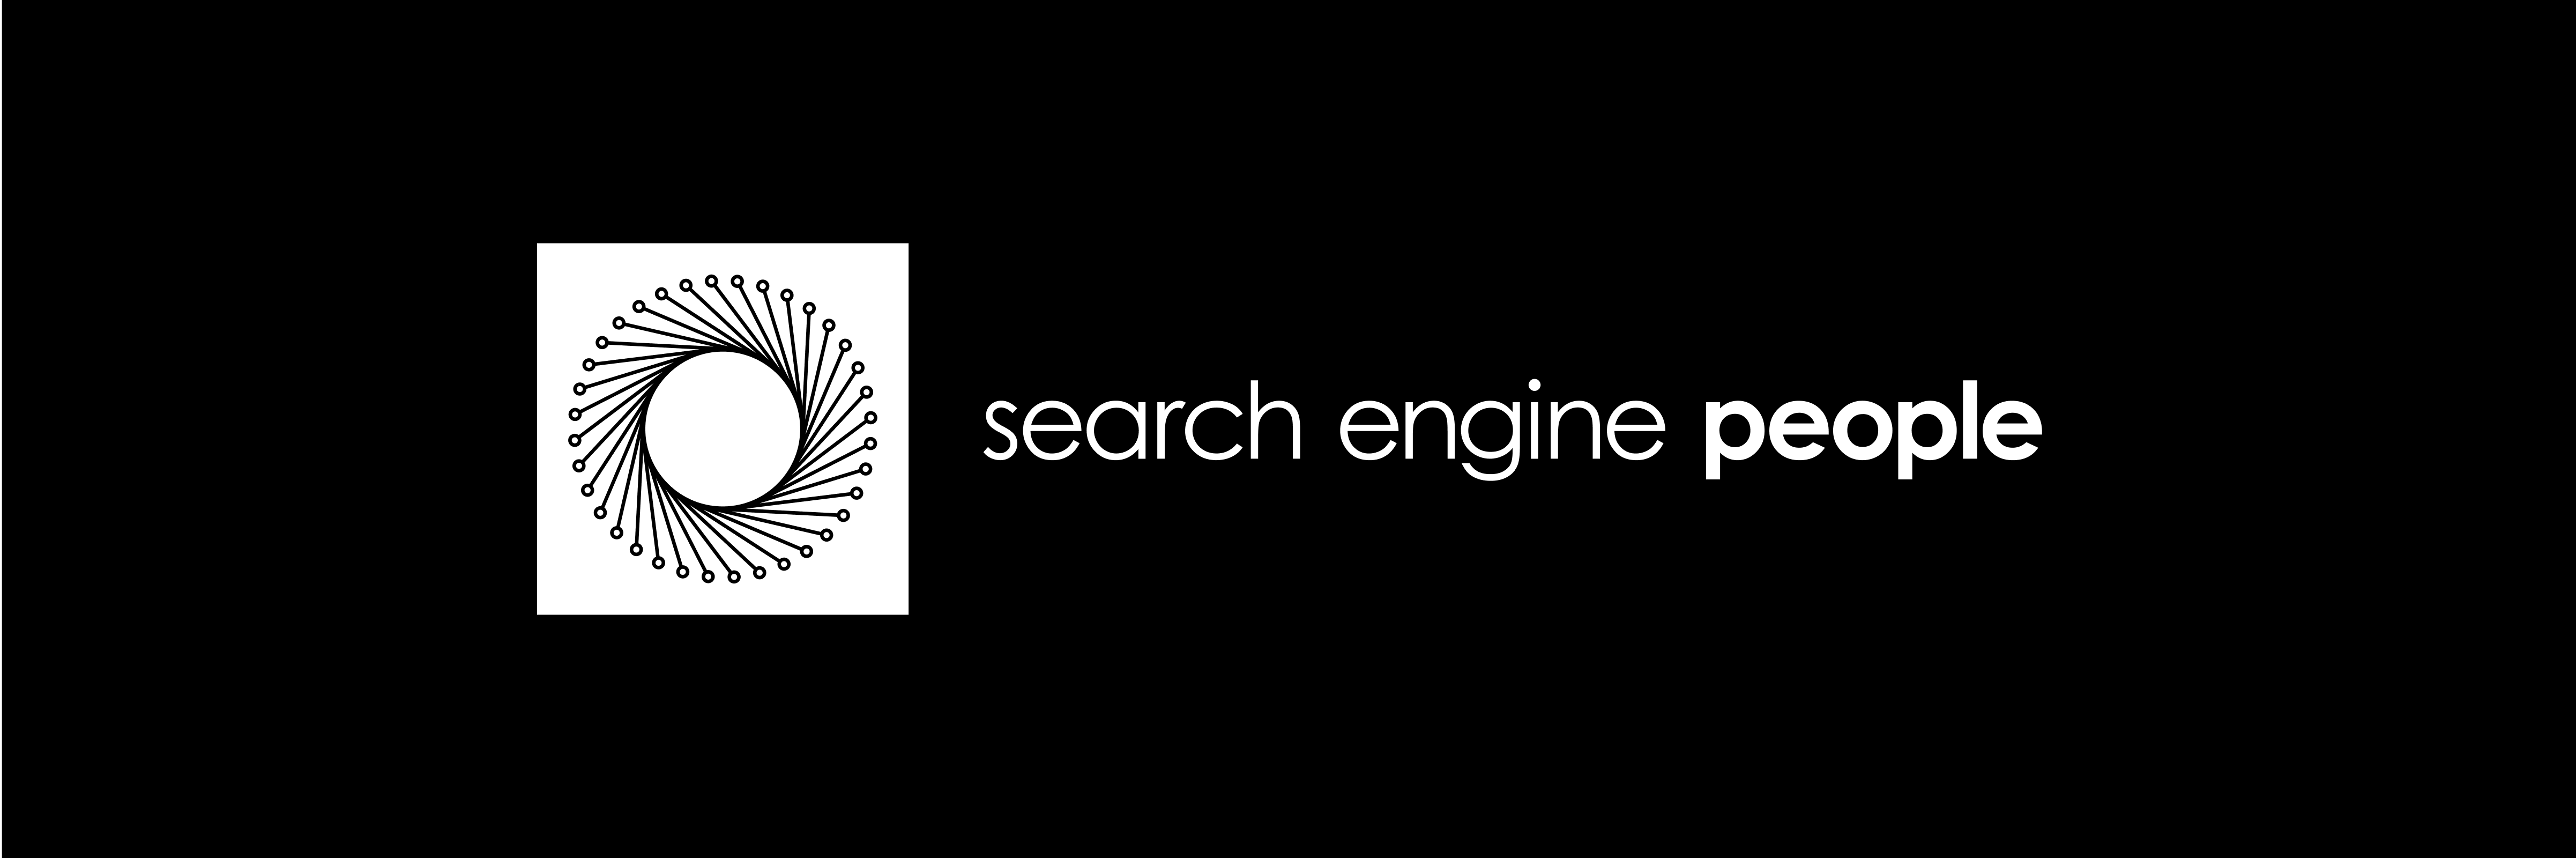 simon-p-coyle-branding-logo-design-2009-search-engine-people